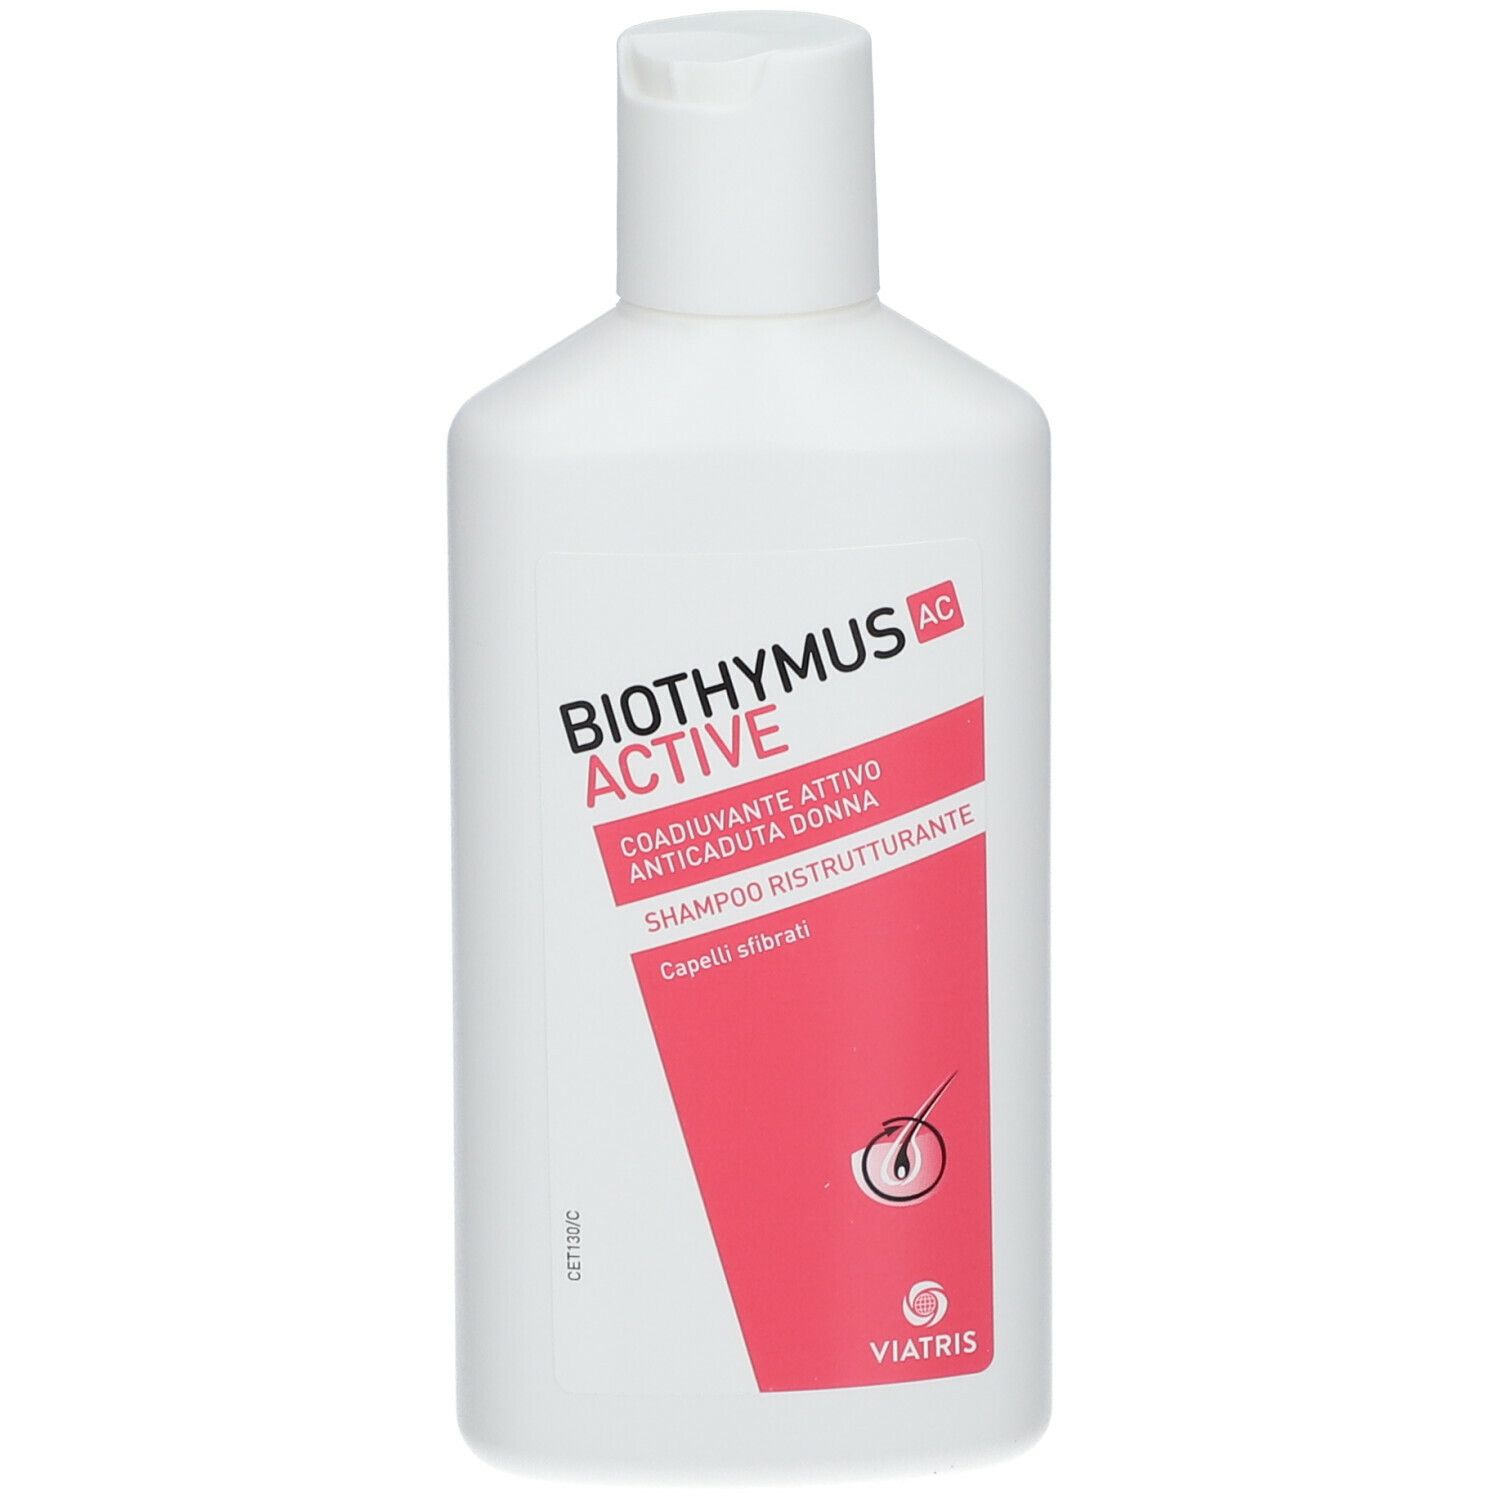 Image of Biothymus AC Active Shampoo Ristrutturante Set da 2